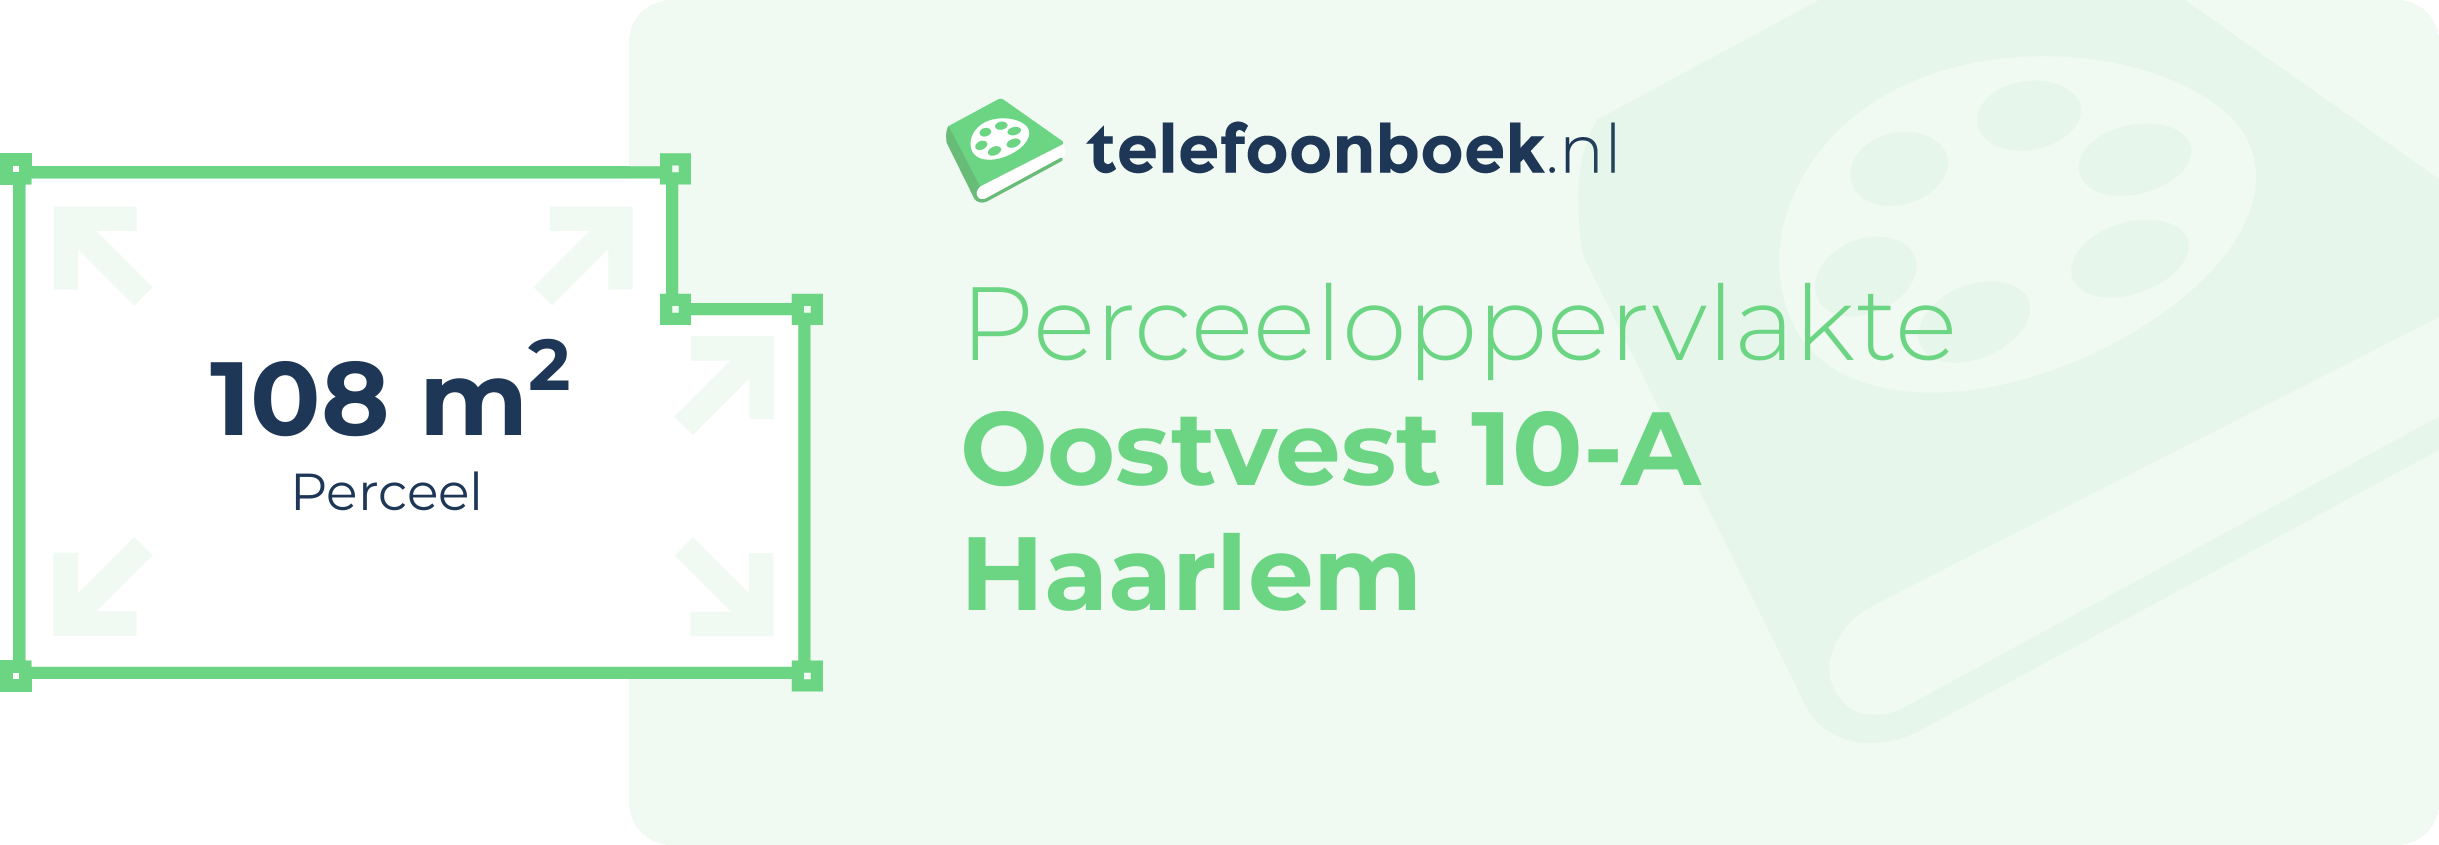 Perceeloppervlakte Oostvest 10-A Haarlem